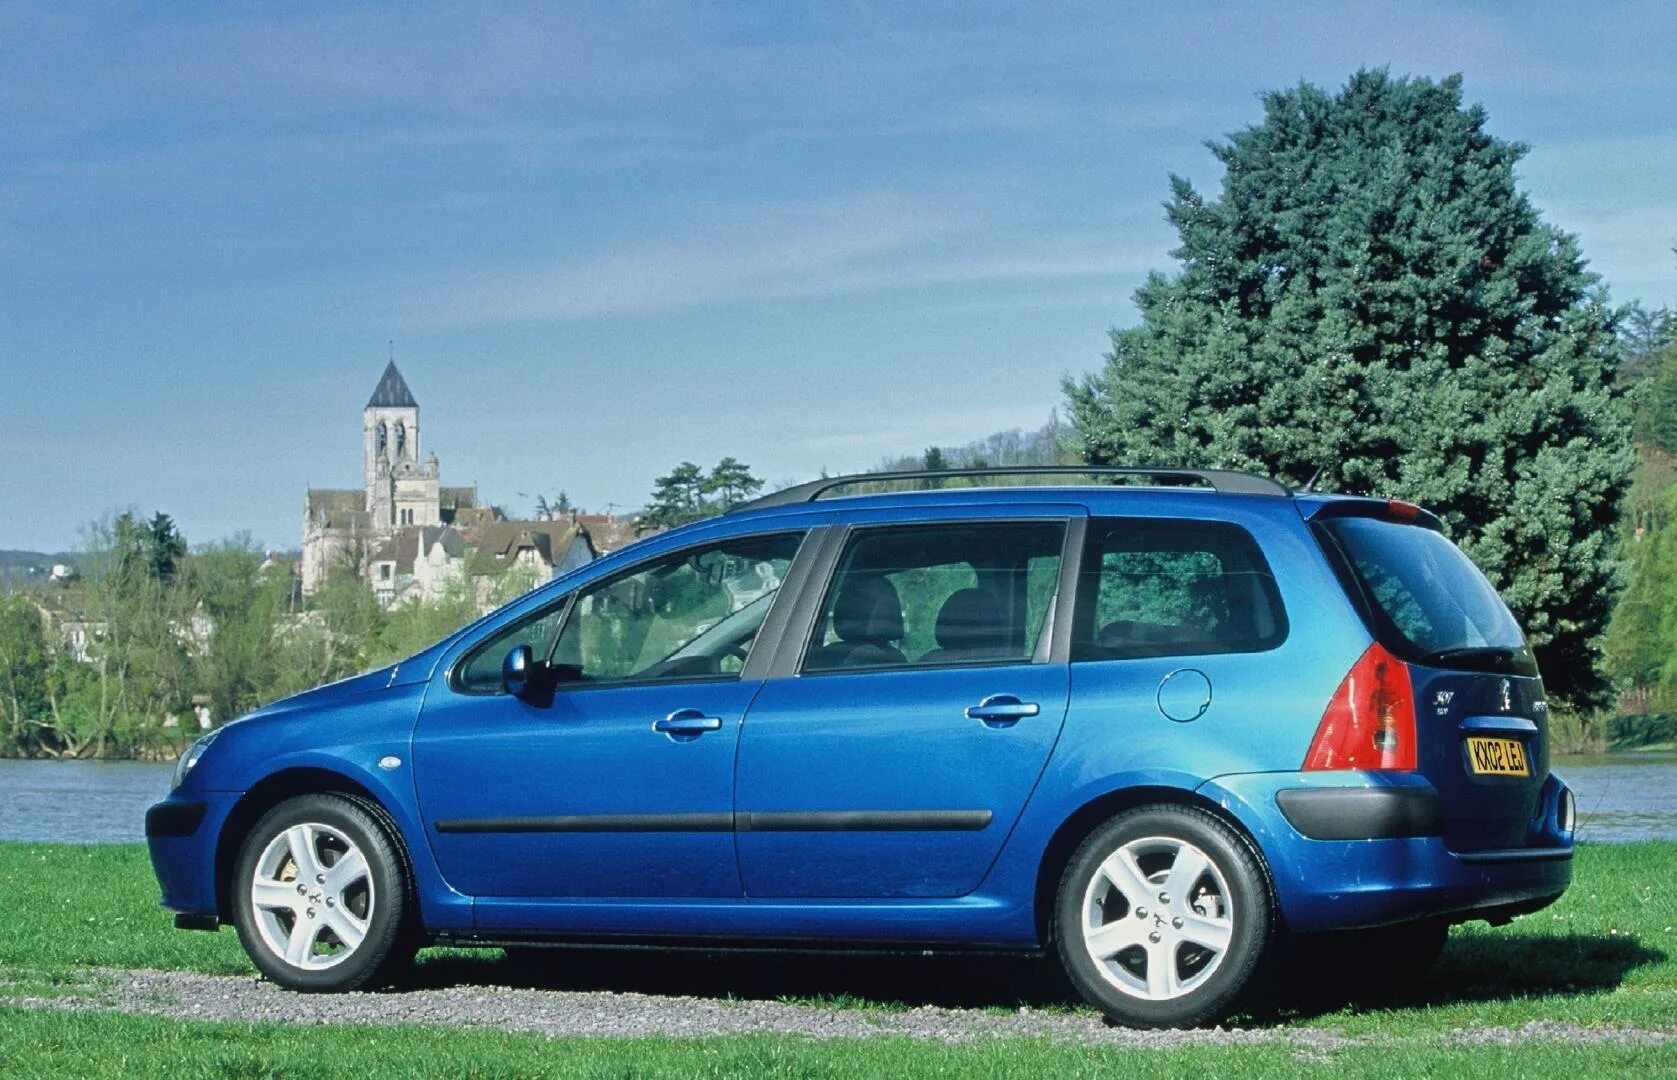 Peugeot 307 SW. Peugeot 307 SW 2002. Пежо 307 универсал 2002. Пежо 307 sw универсал